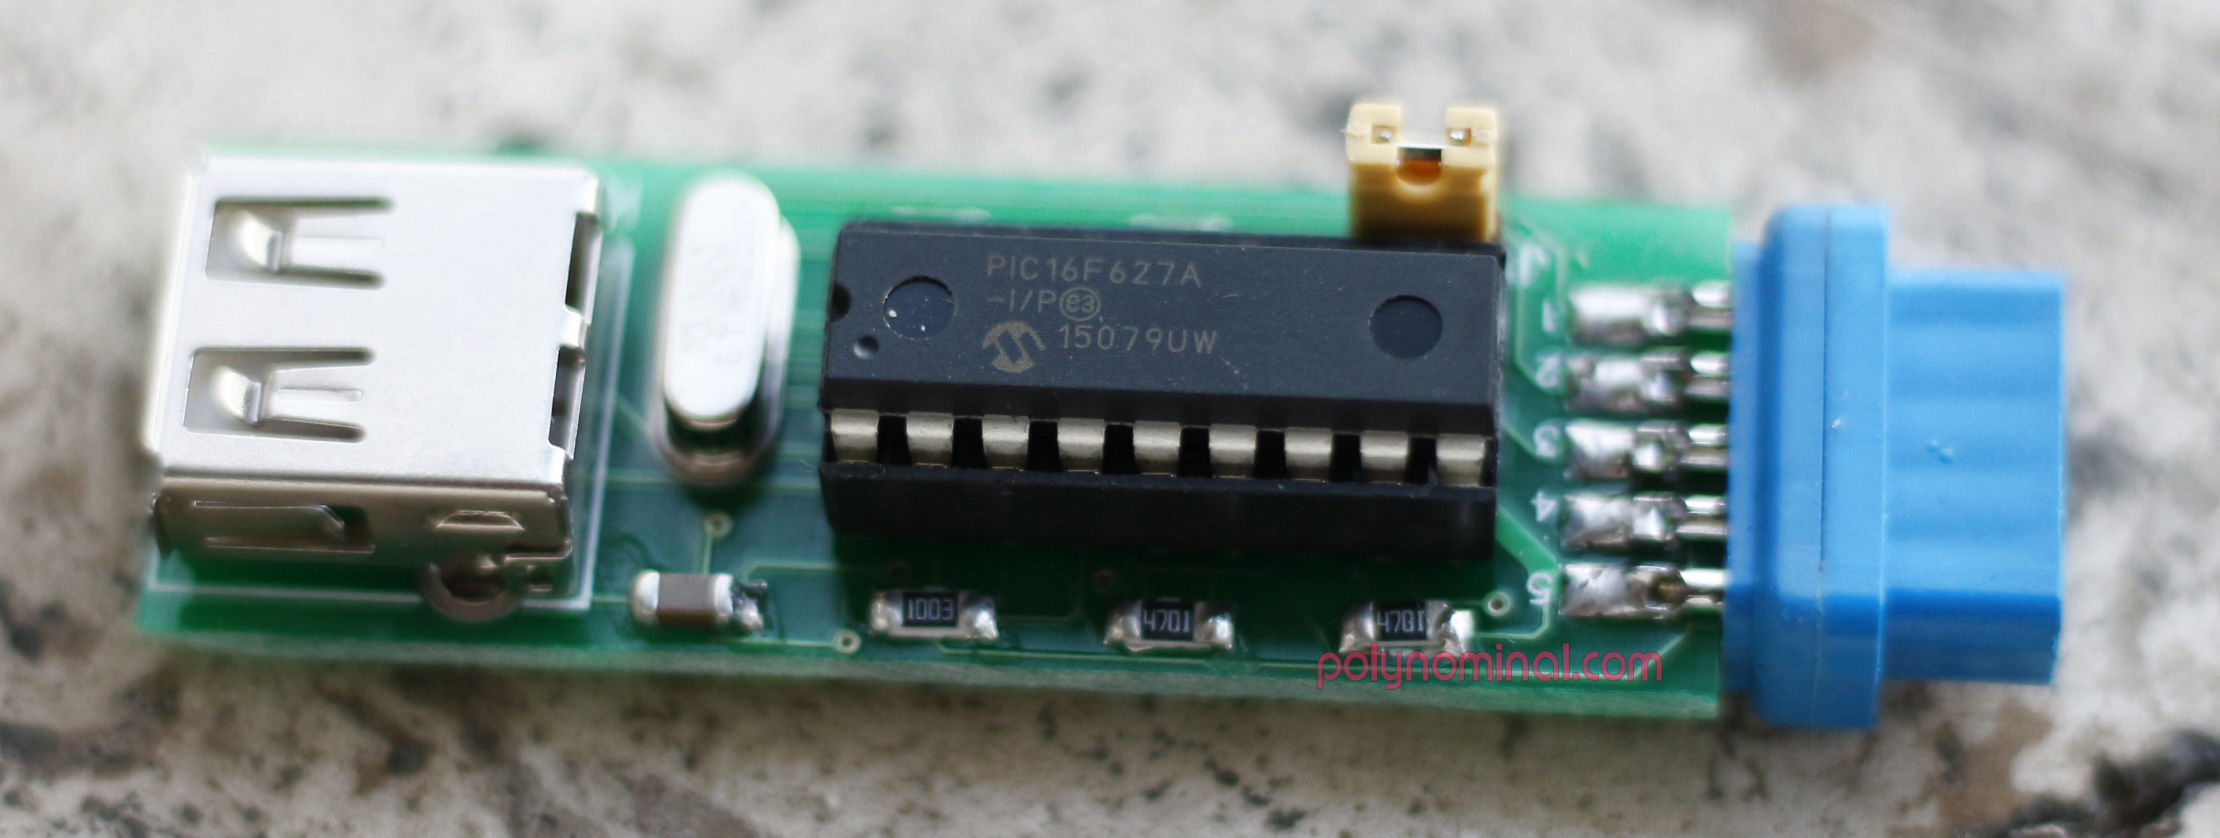 Roland MU1 MSX mouse adapter